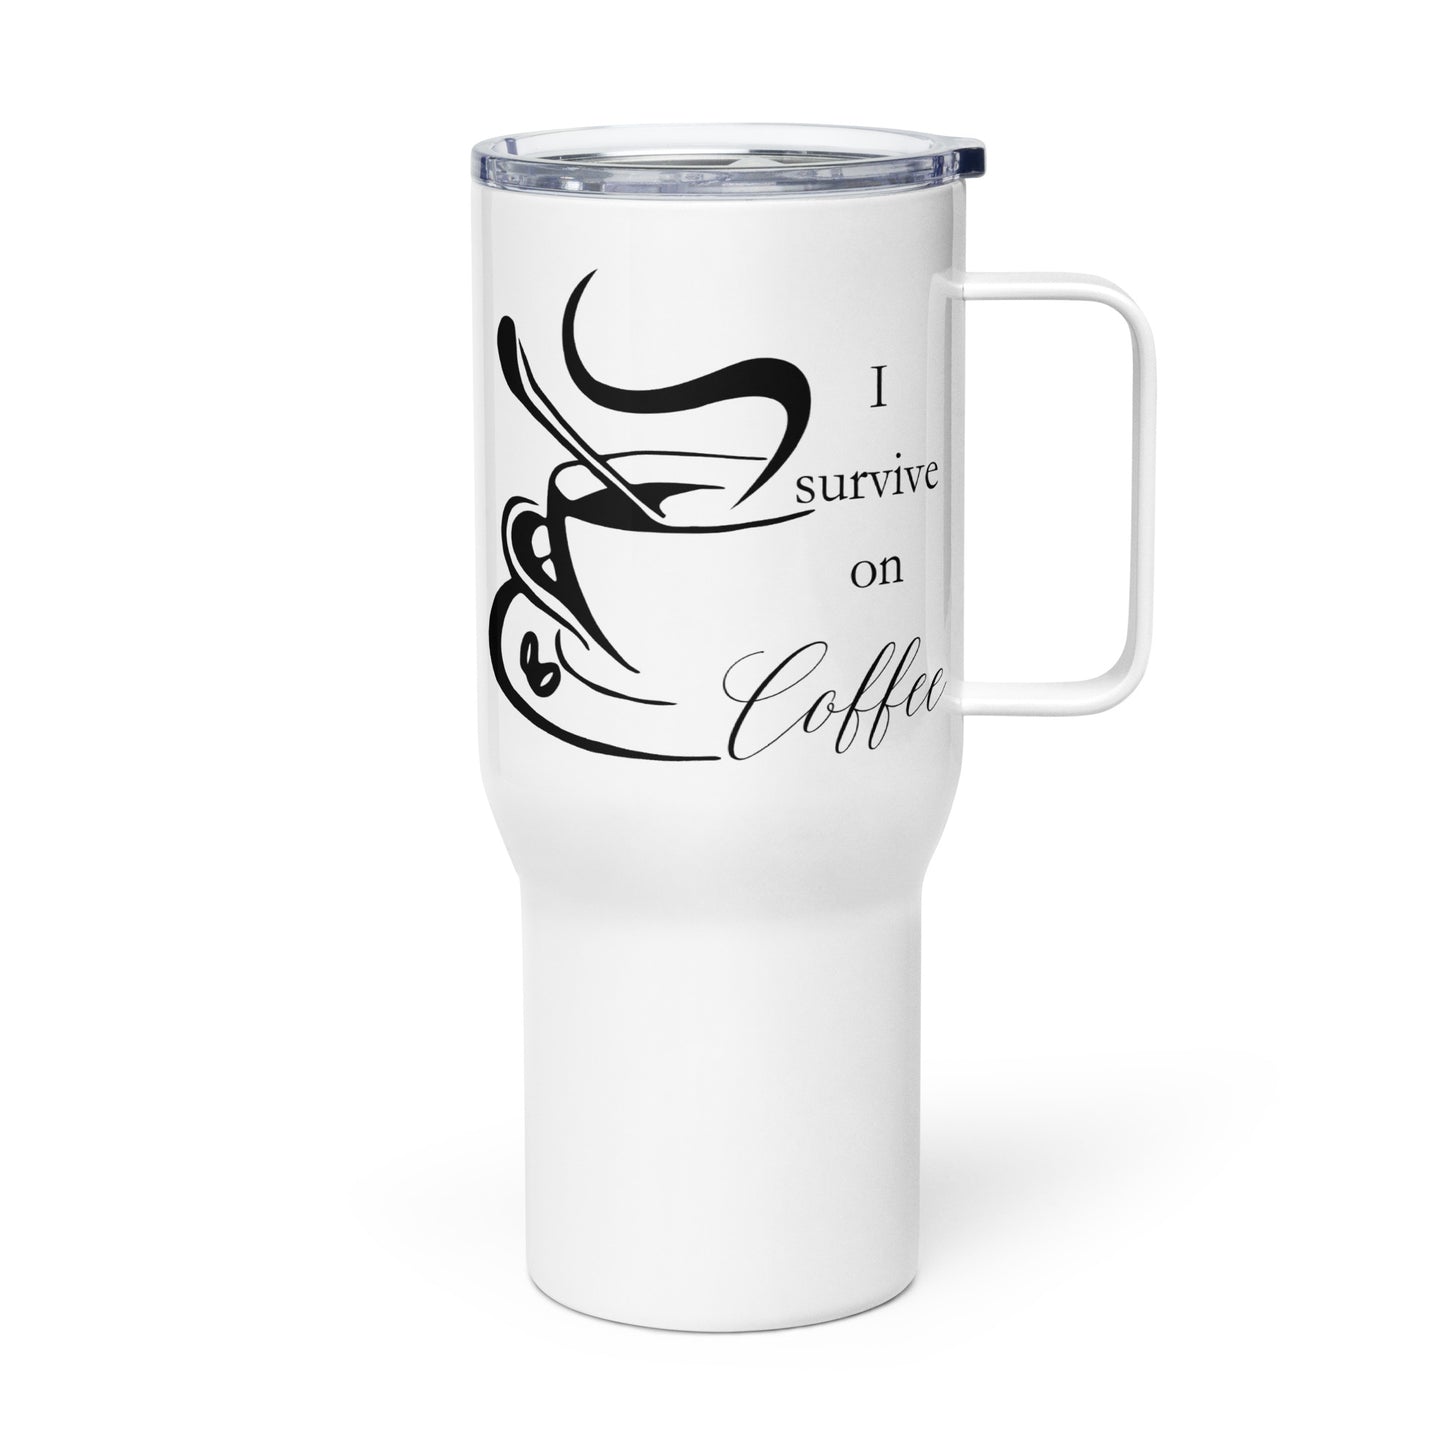 I Survive on Coffee Elegant Travel mug with a handle